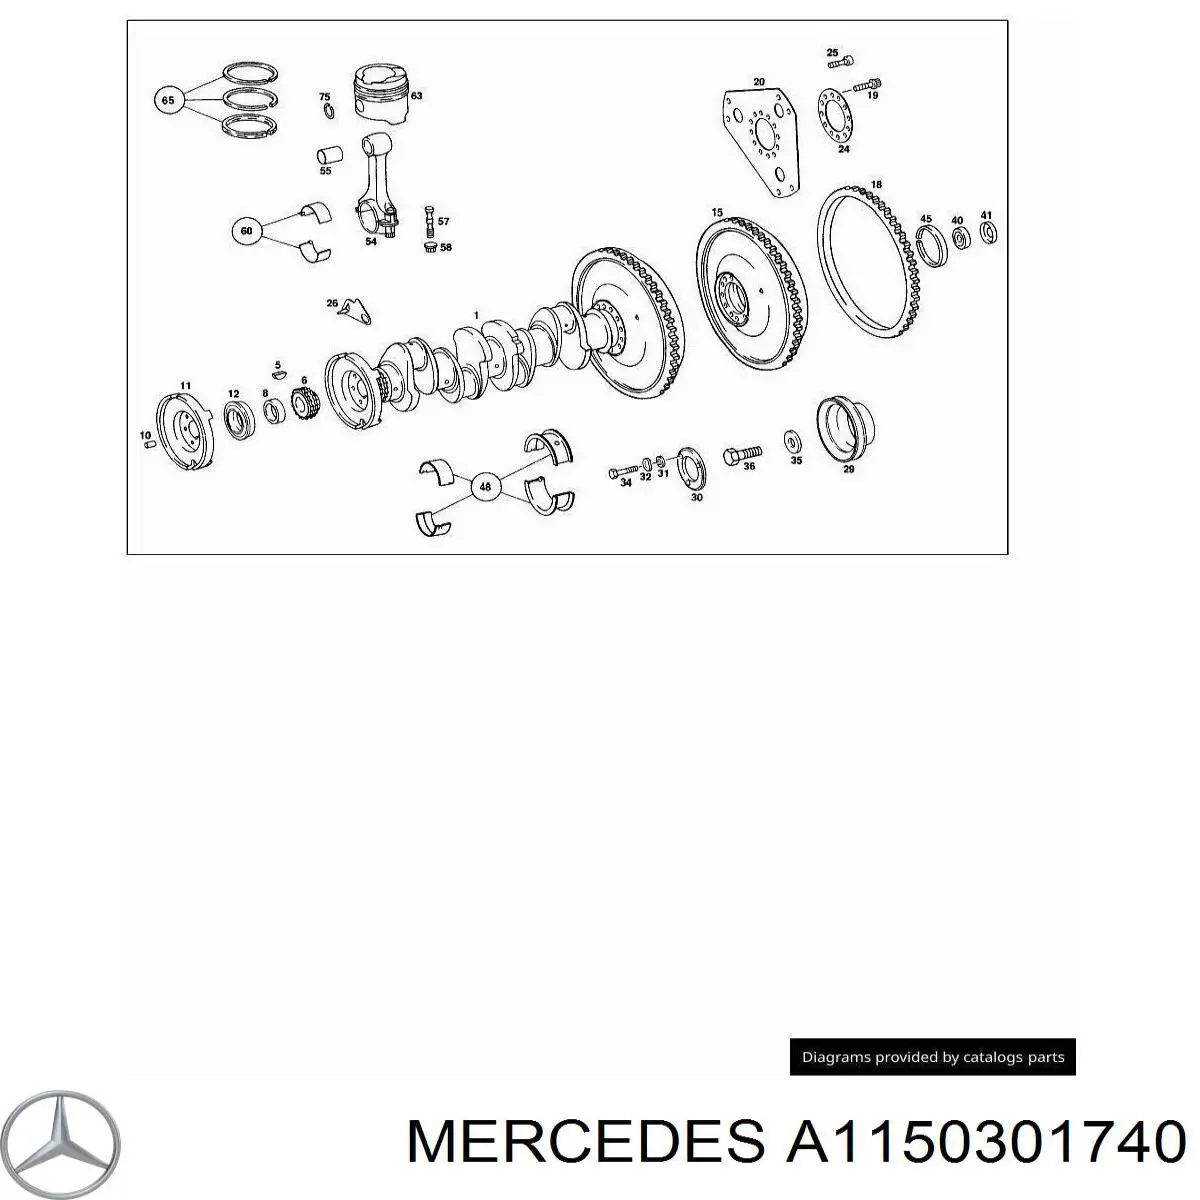 1150301540 Mercedes вкладыши коленвала коренные, комплект, стандарт (std)